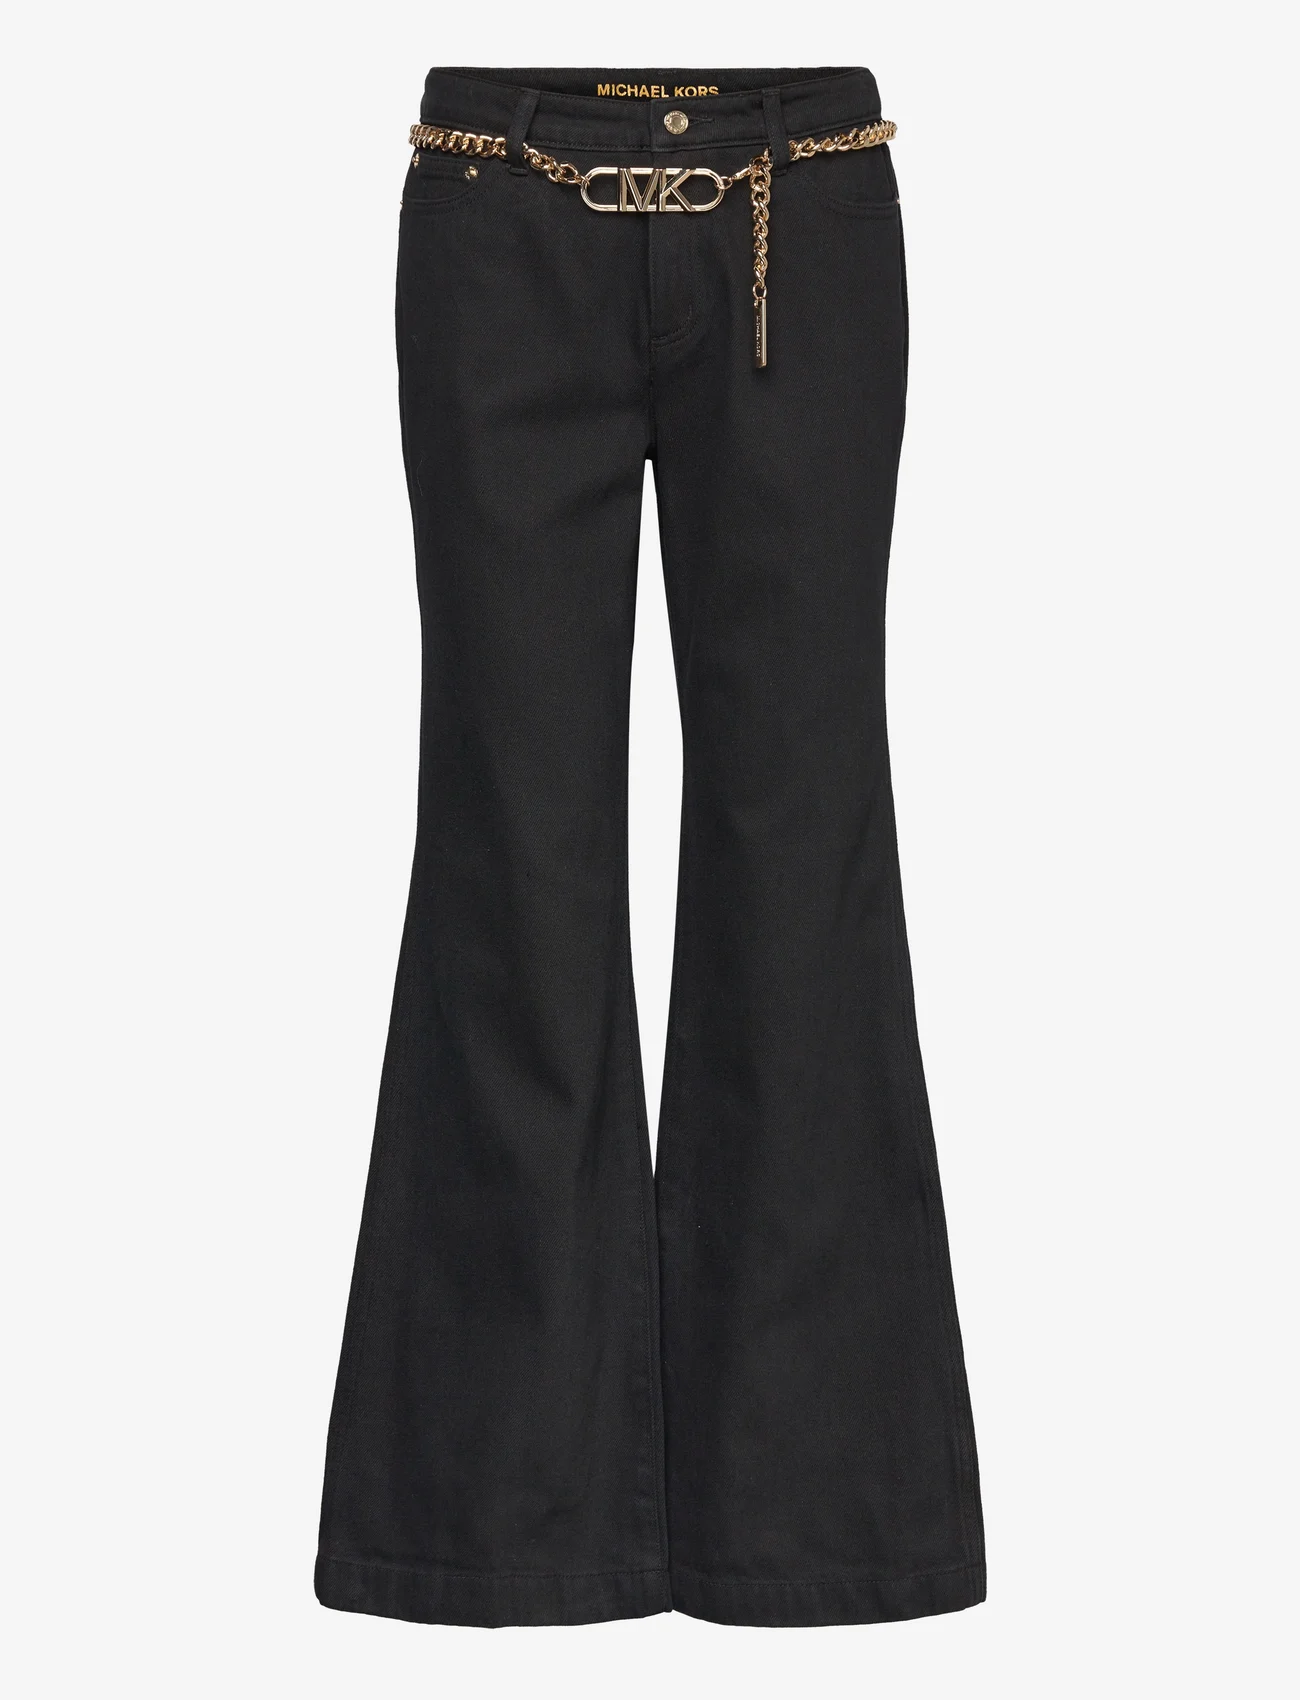 Michael Kors - FLARE CHAIN BELT DNM JEAN - flared jeans - black - 0